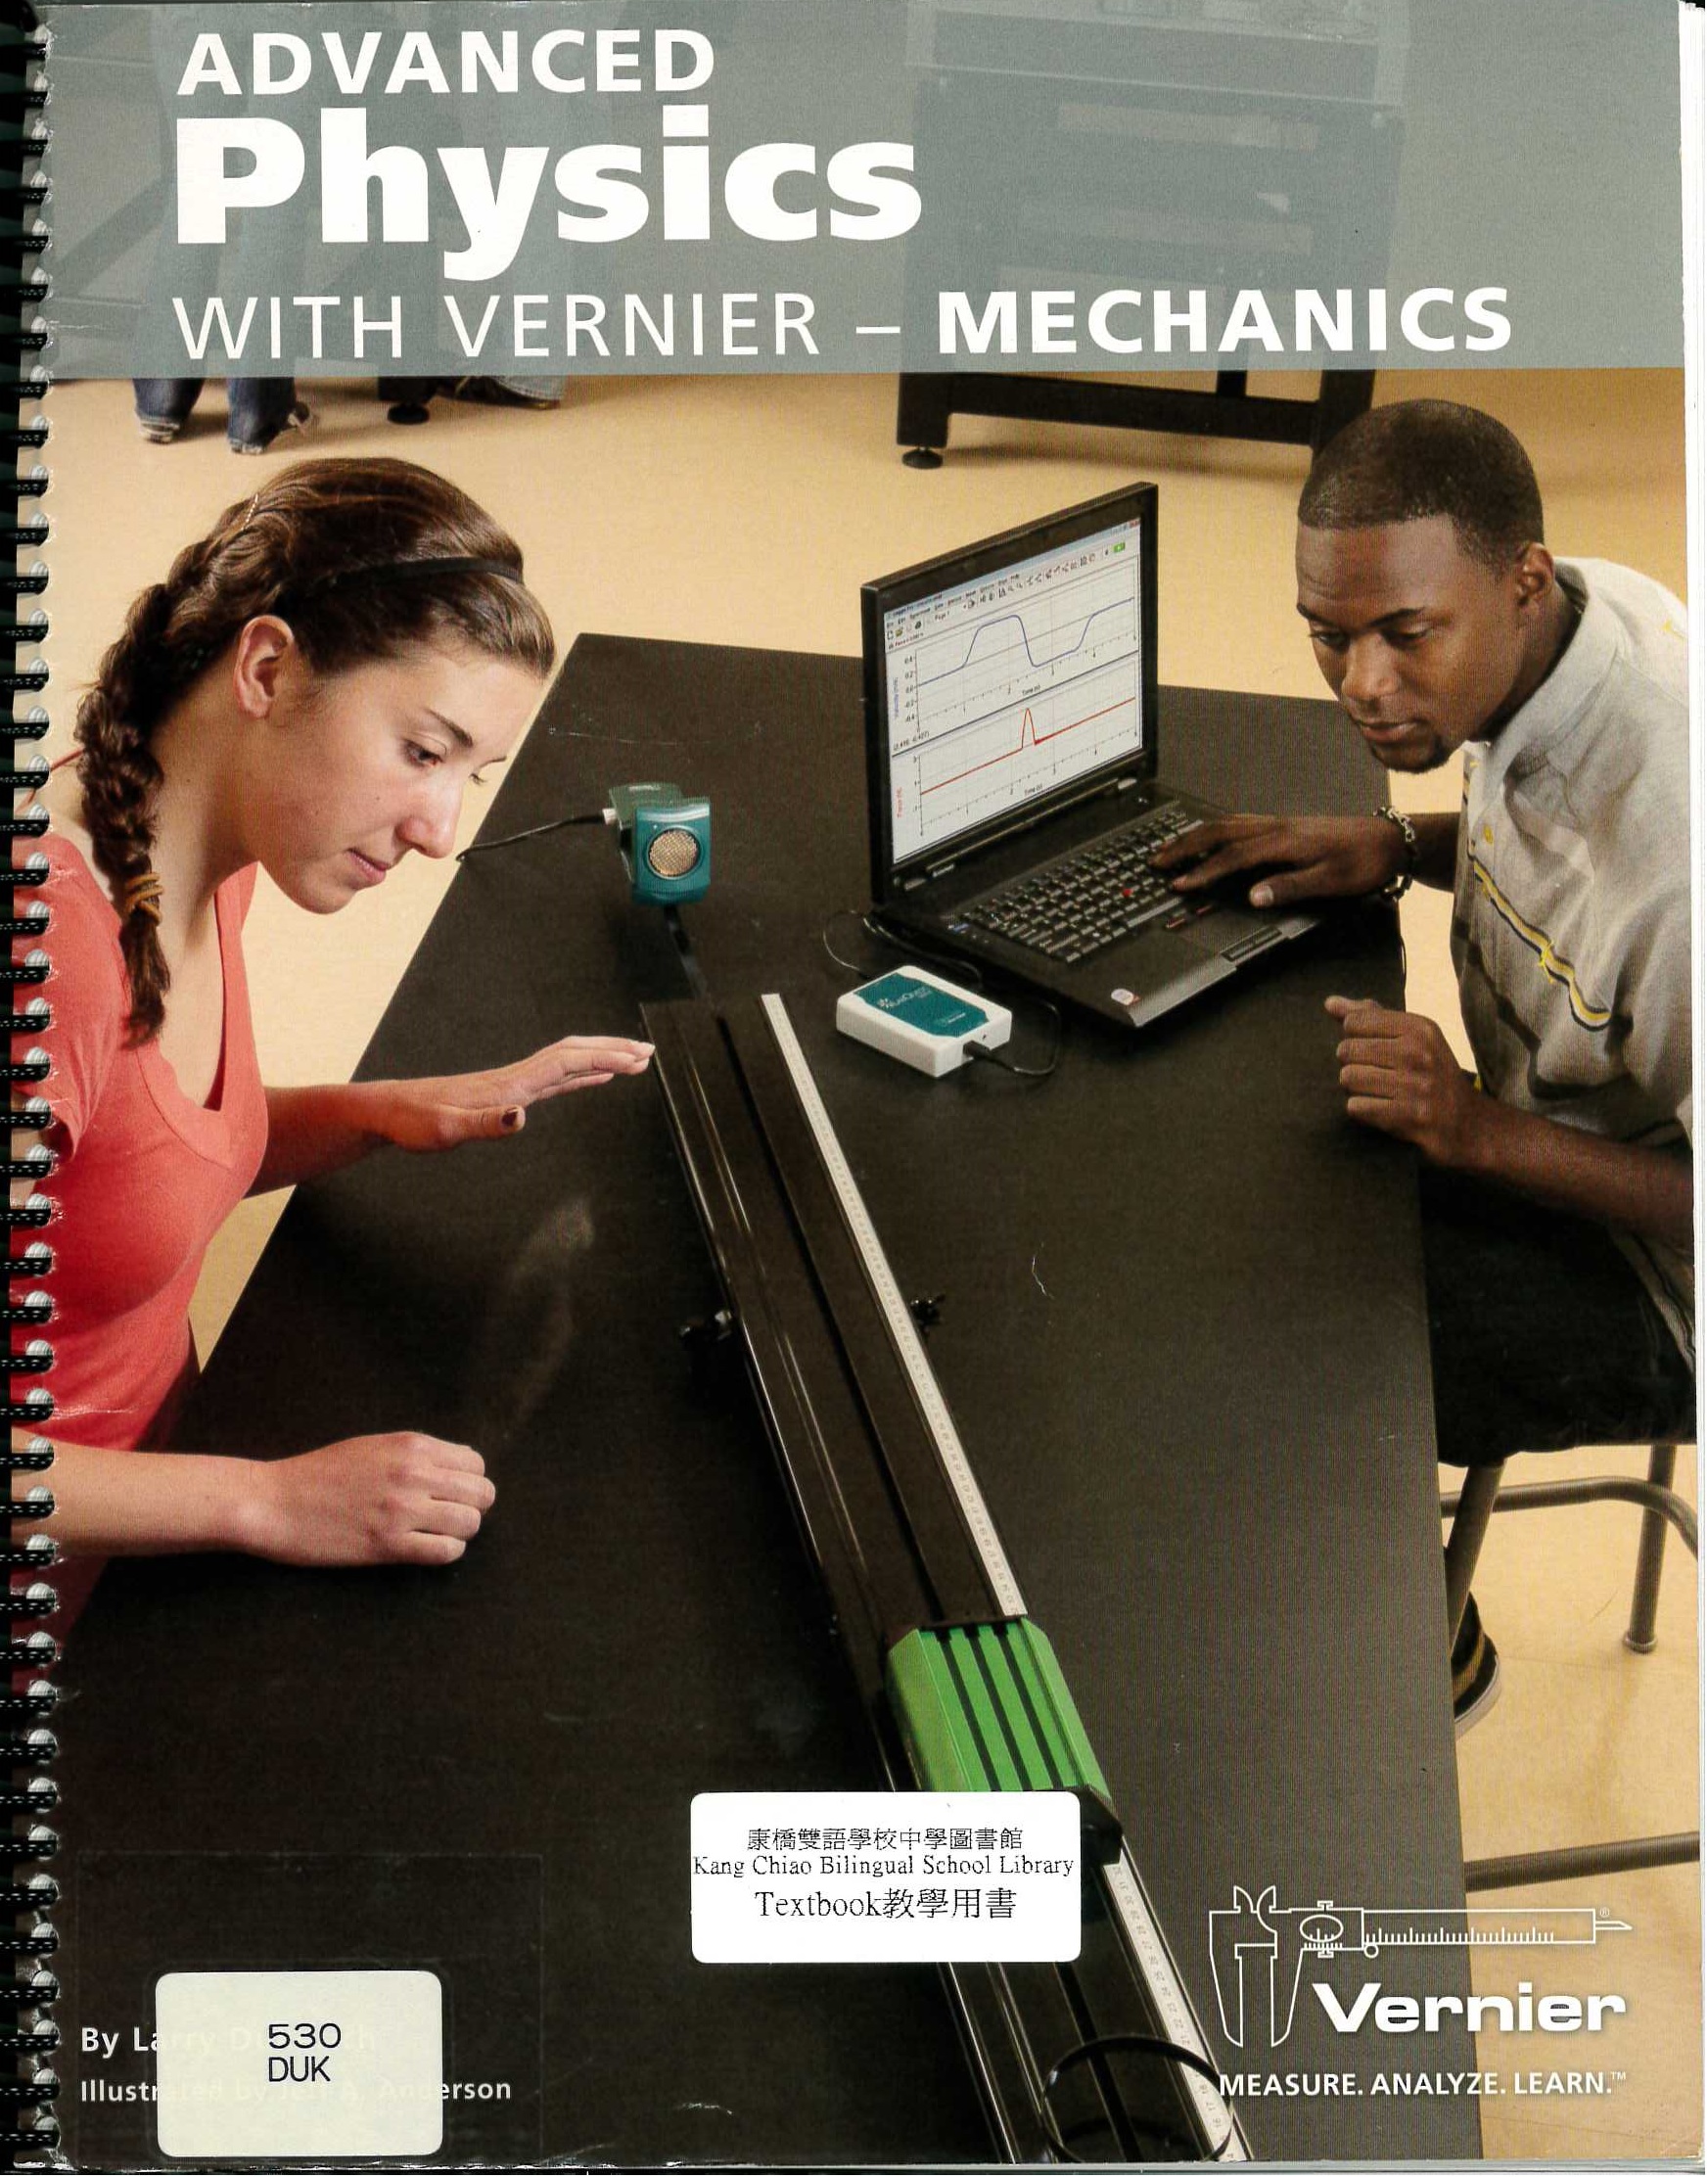 Advanced physics with vernier-mechanics